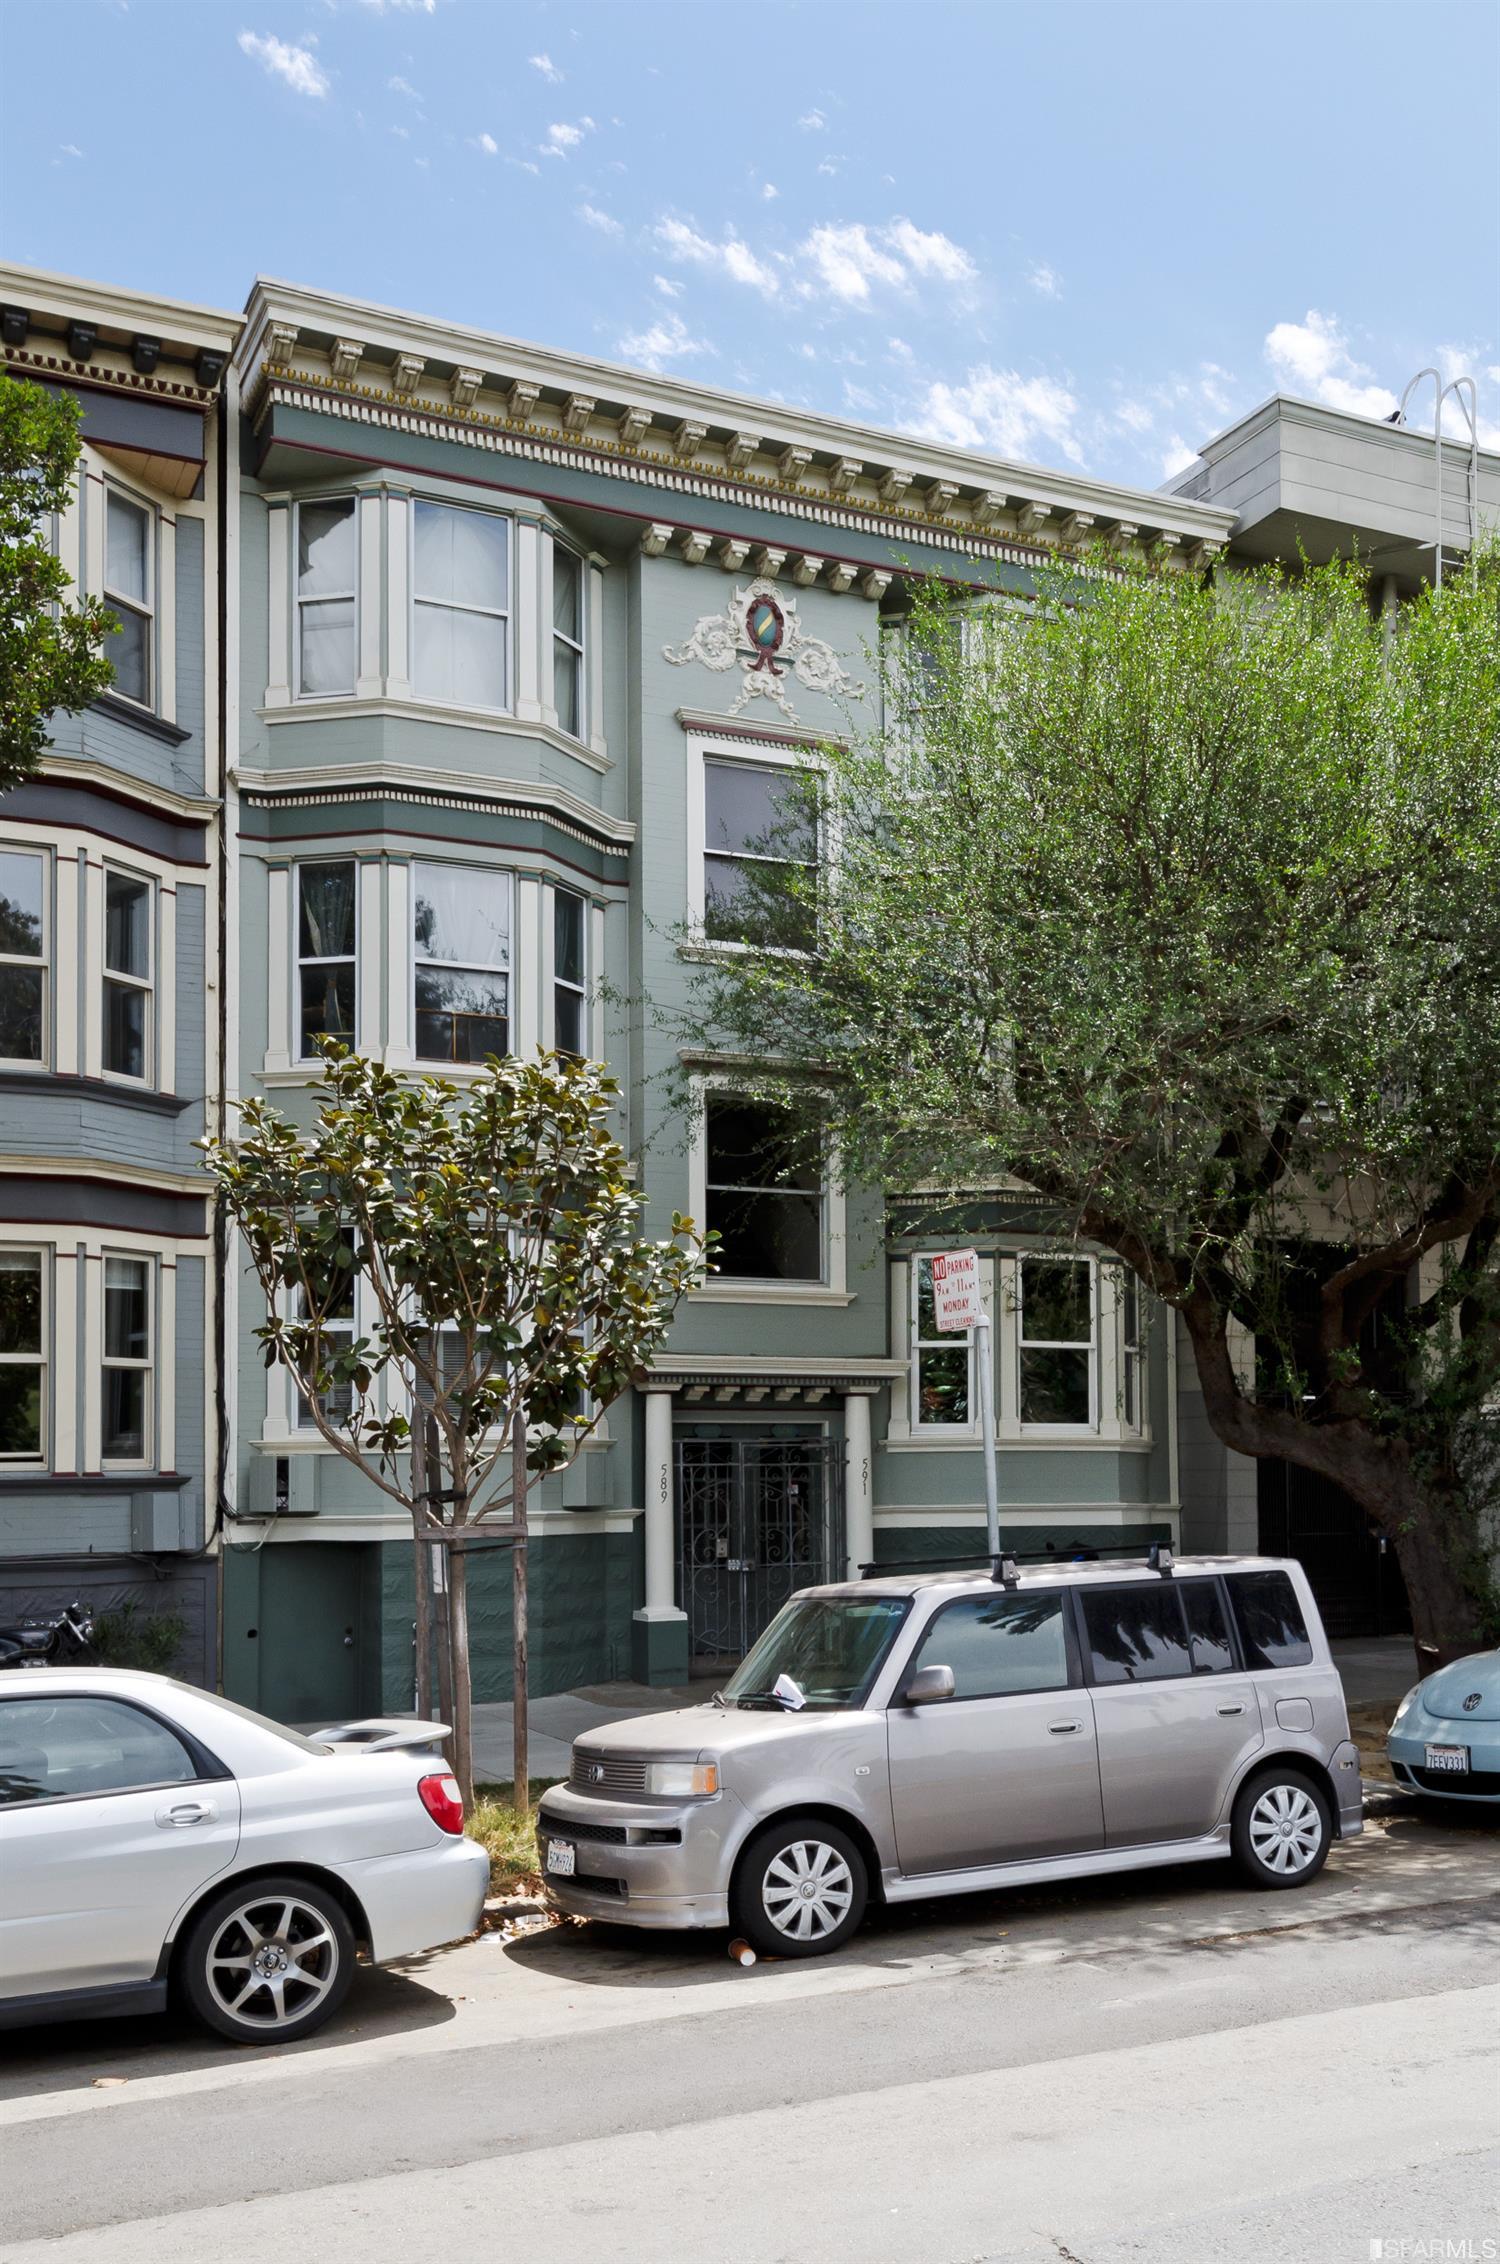 589-591 Dolores Street, San Francisco Property Listing: MLS® #456002